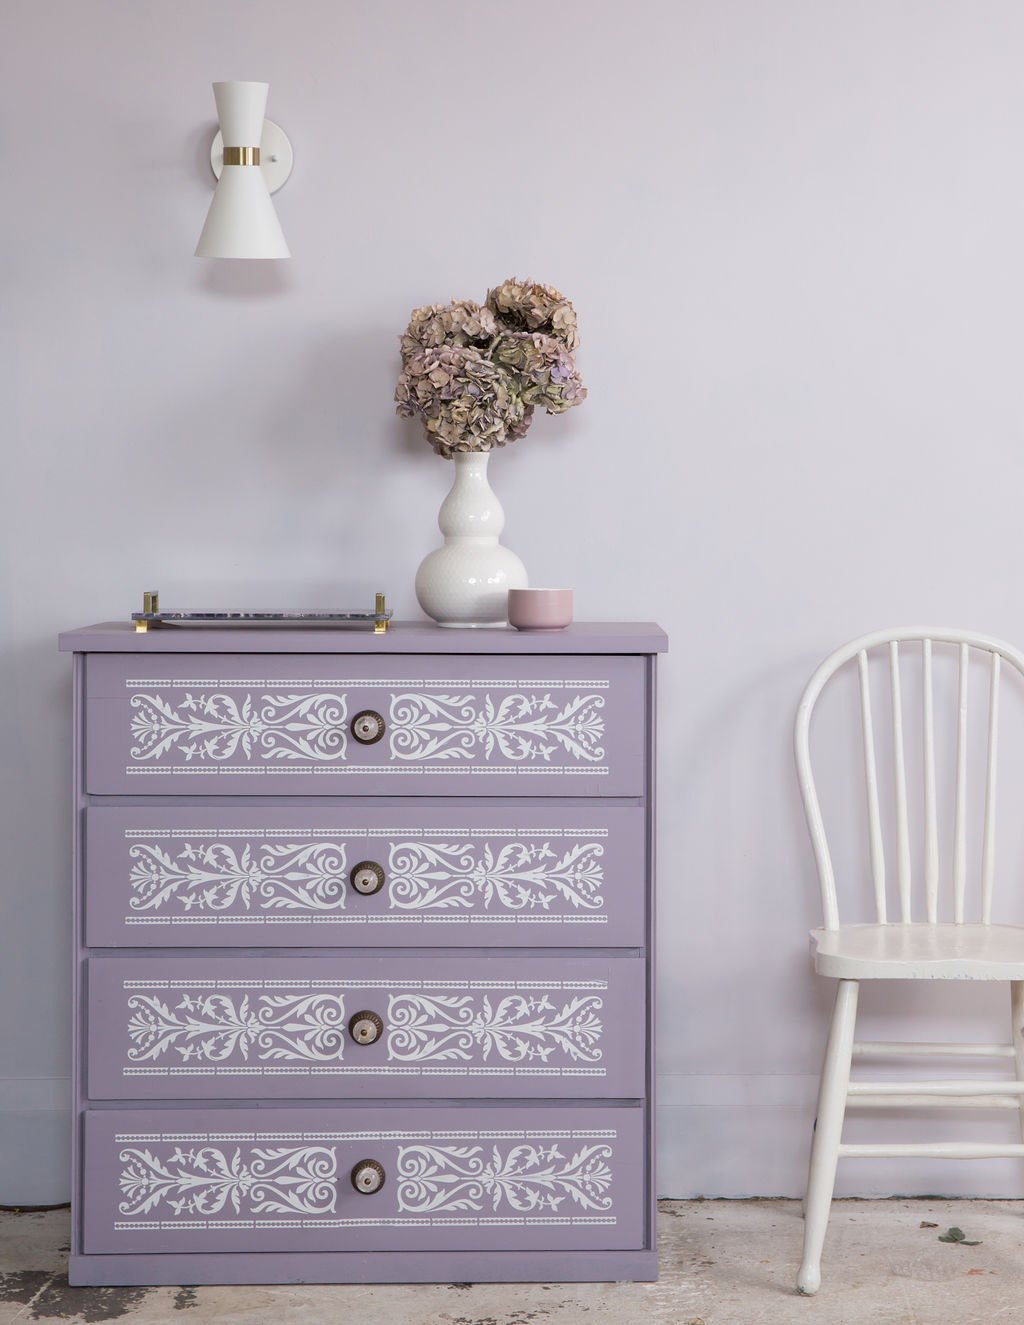 How To Paint Laminate Furniture, Painting Laminate Dresser